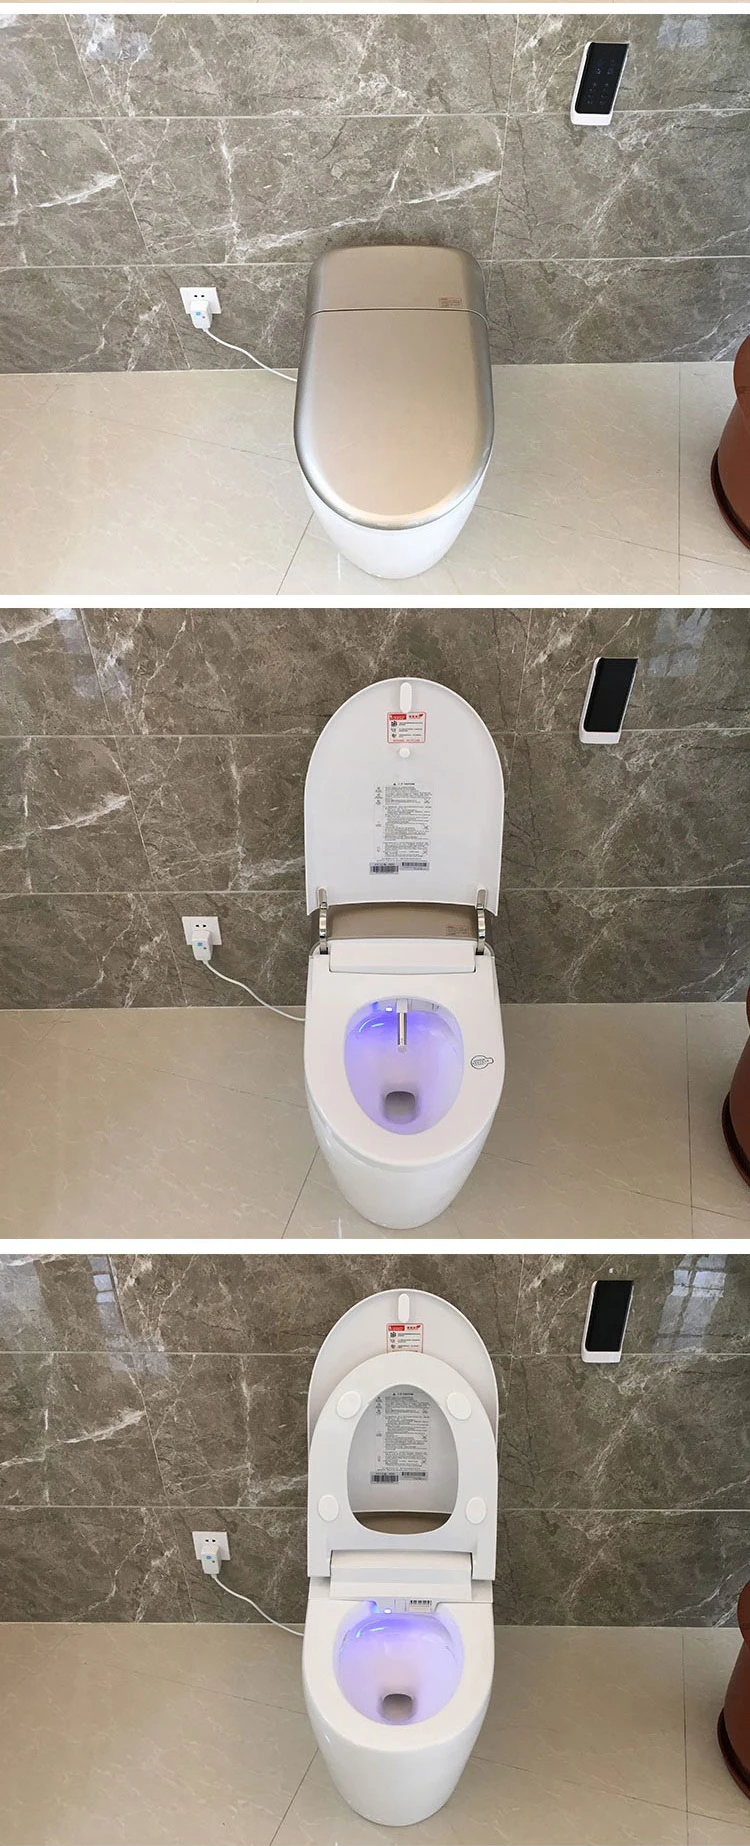 Bathroom ceramic intelligent heated seat cover automatic toilet